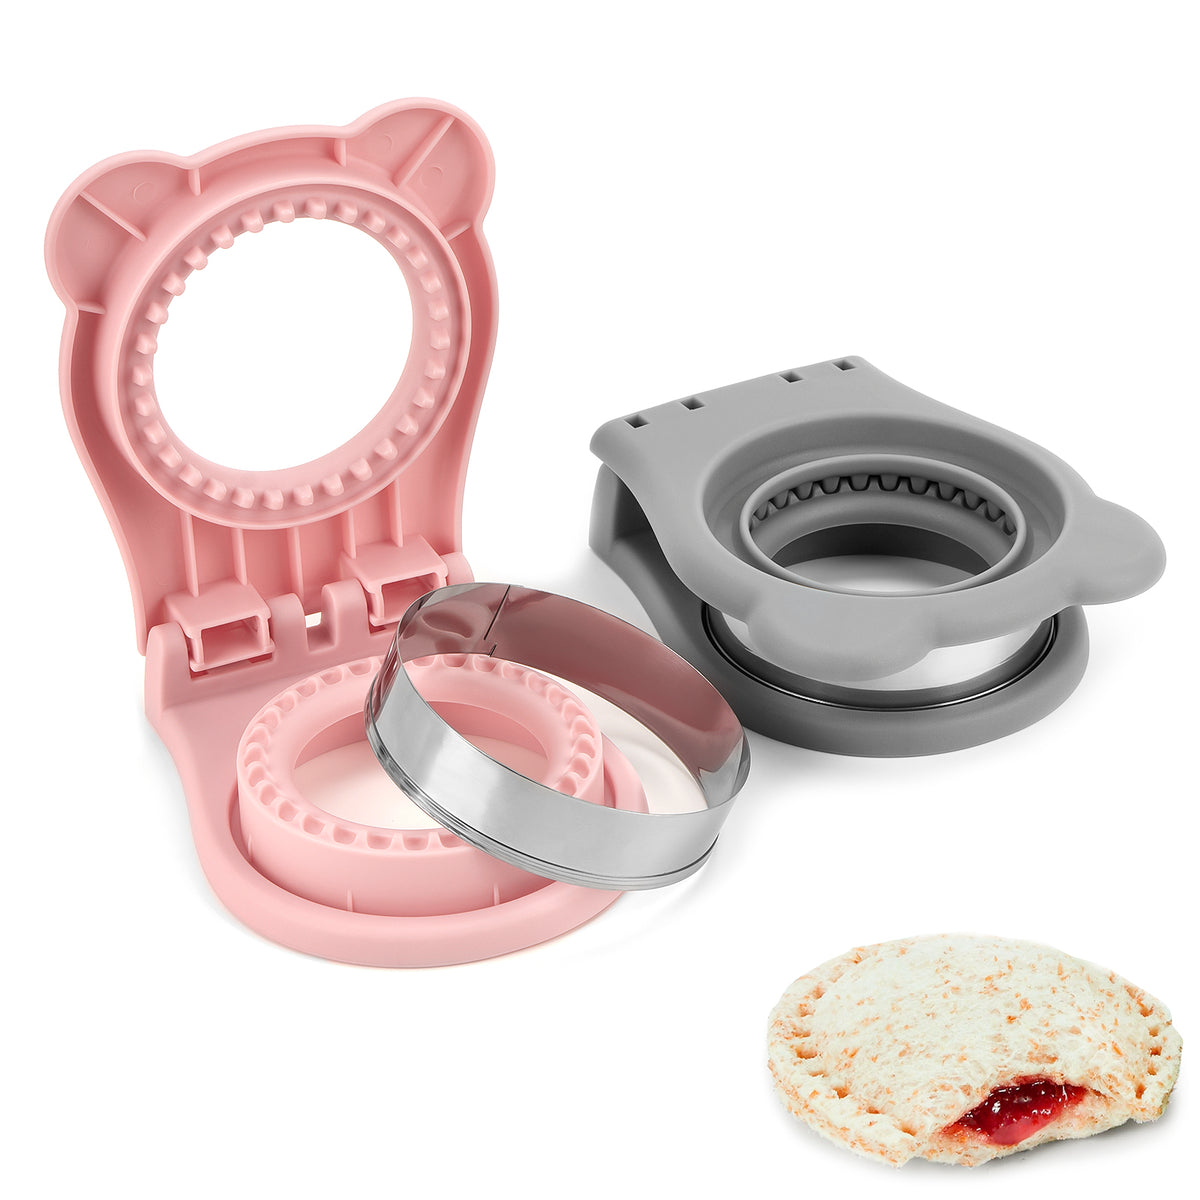 Adorila 2 Pack Sandwich Cutter Sealer for Kids, DIY Decruster Sandwiches, Uncrustables Sandwich Maker for Boys Girls Lunch Bento Box (Pink, Grey)